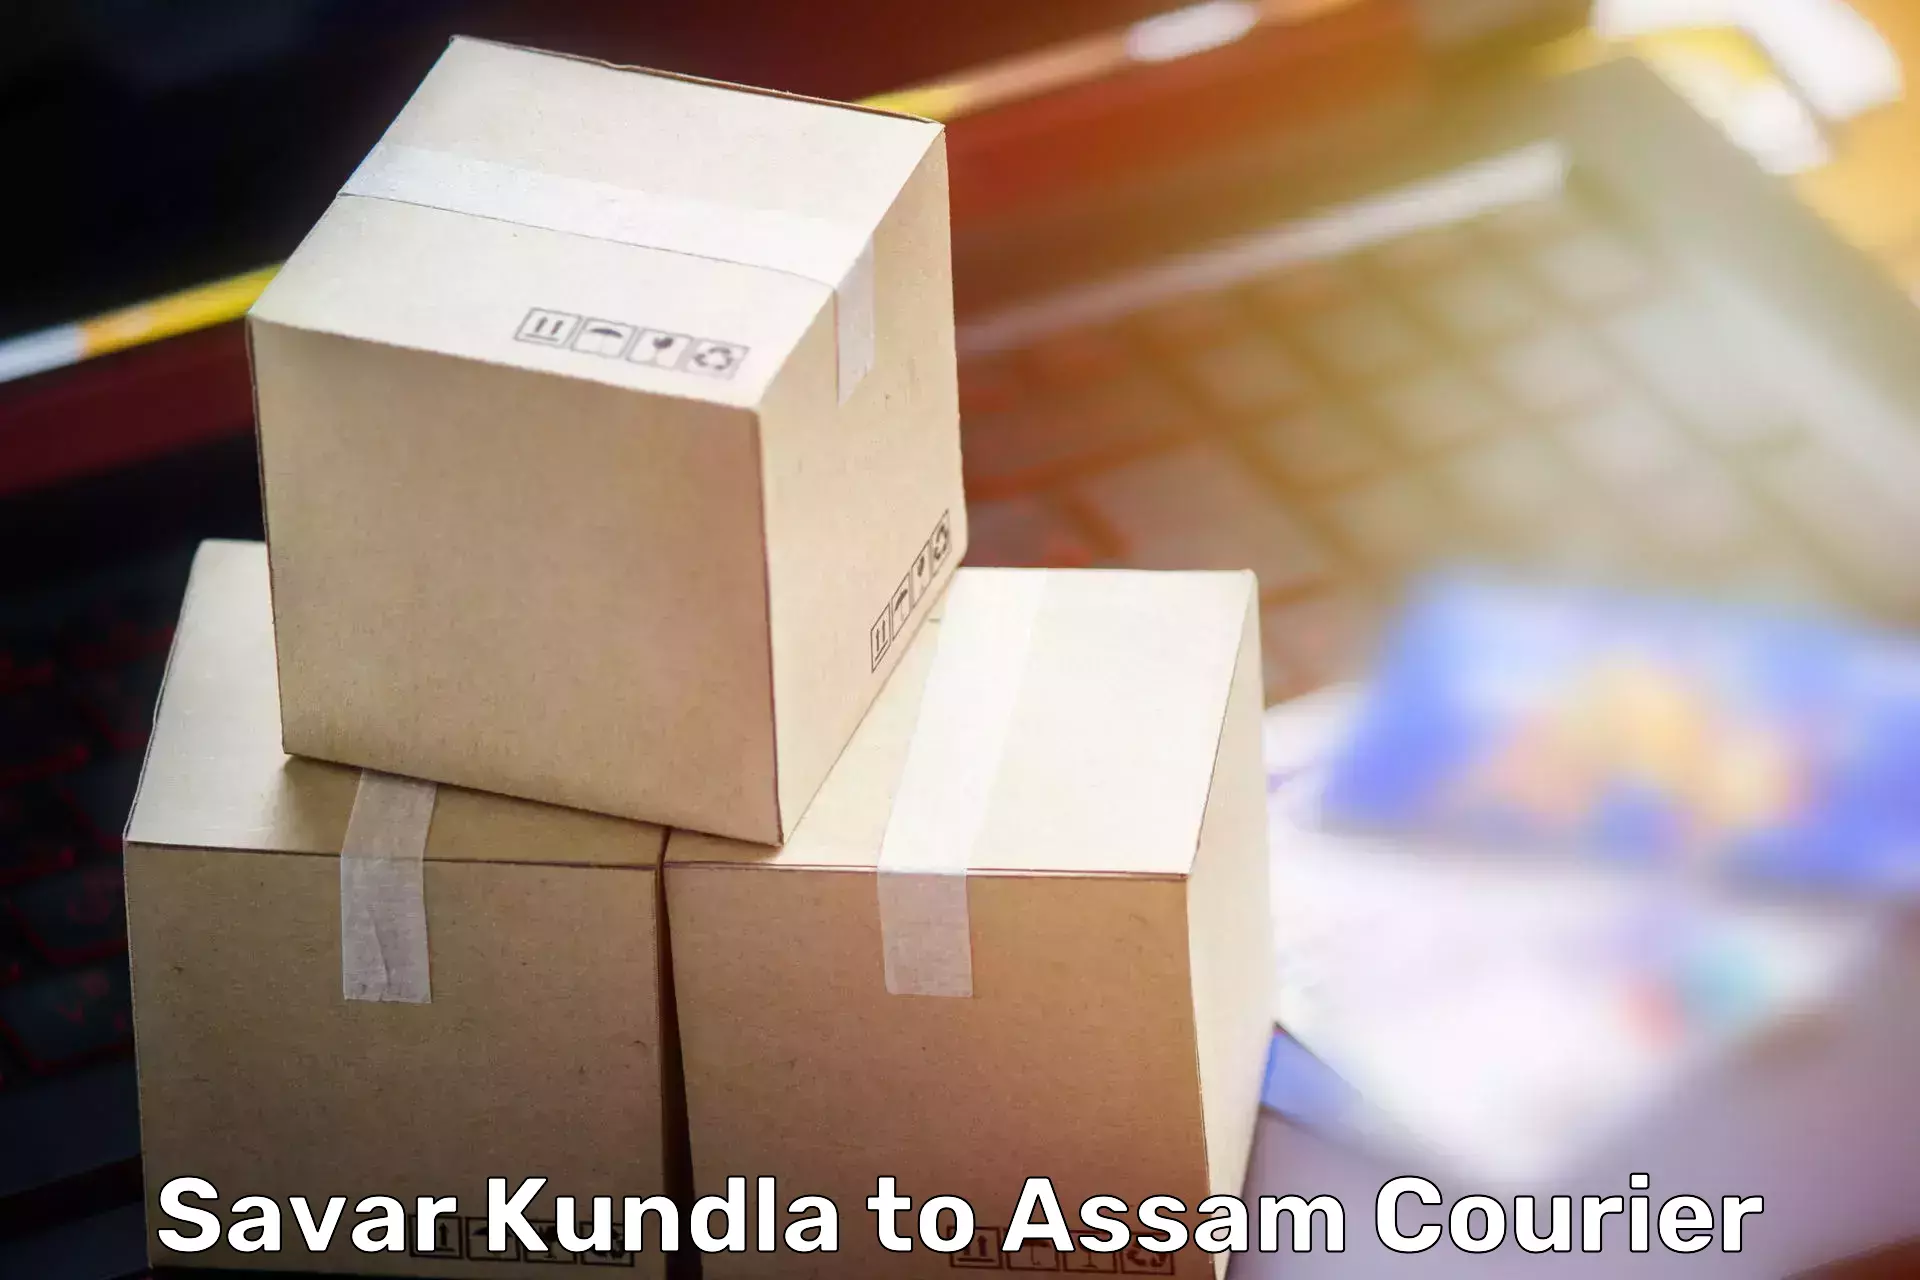 Professional moving assistance Savar Kundla to Dhupdhara